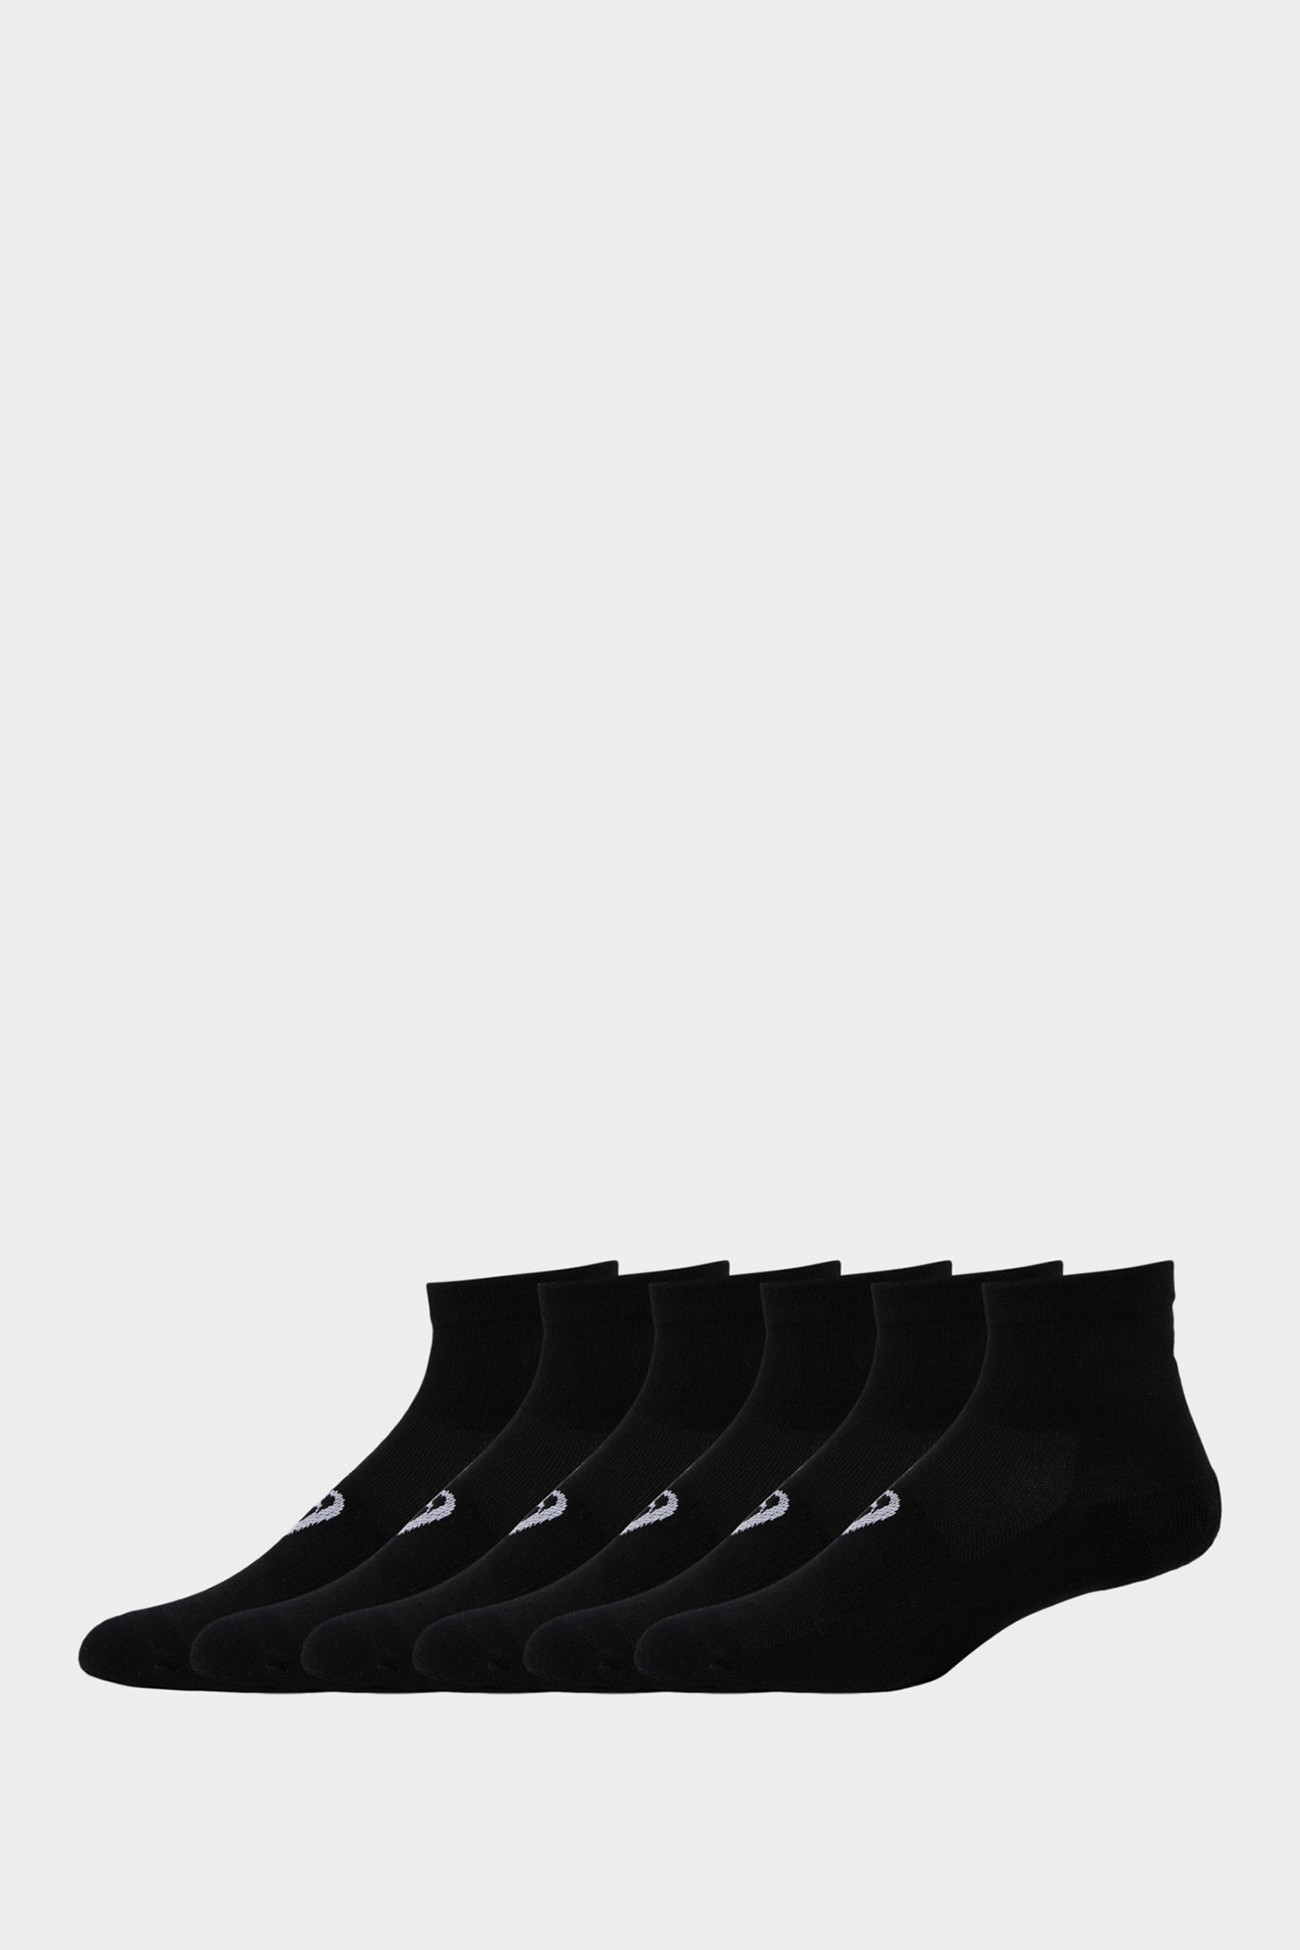 Шкарпетки Asics 6PPK QUARTER SOCK чорні 3033B720-001 изображение 2